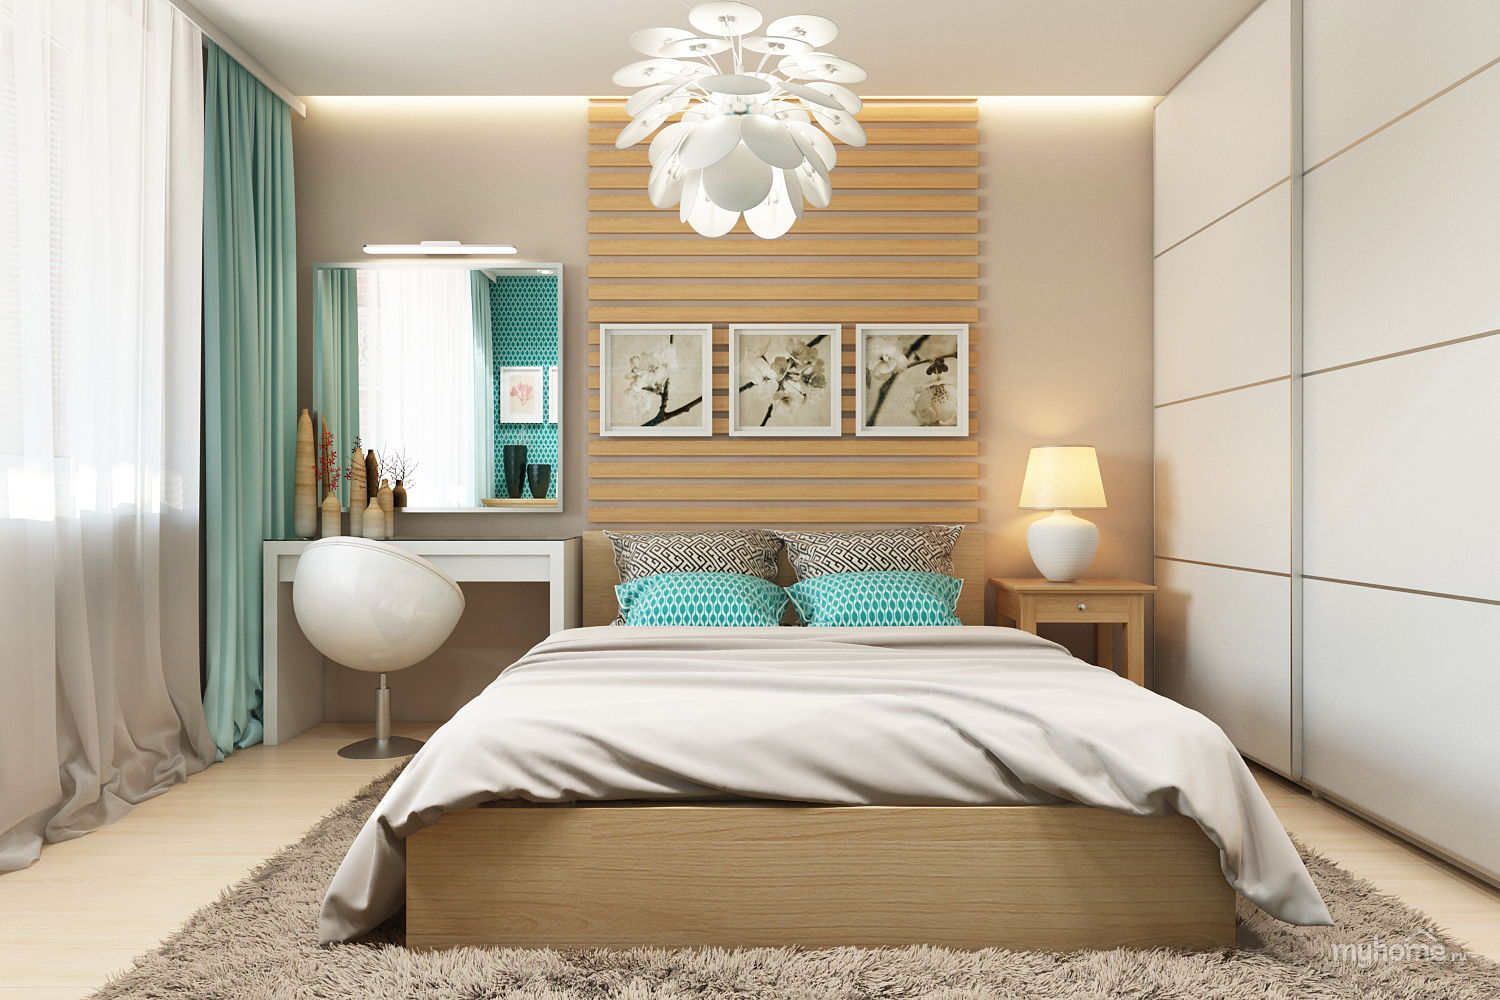 Fashionable bedroom design 2018